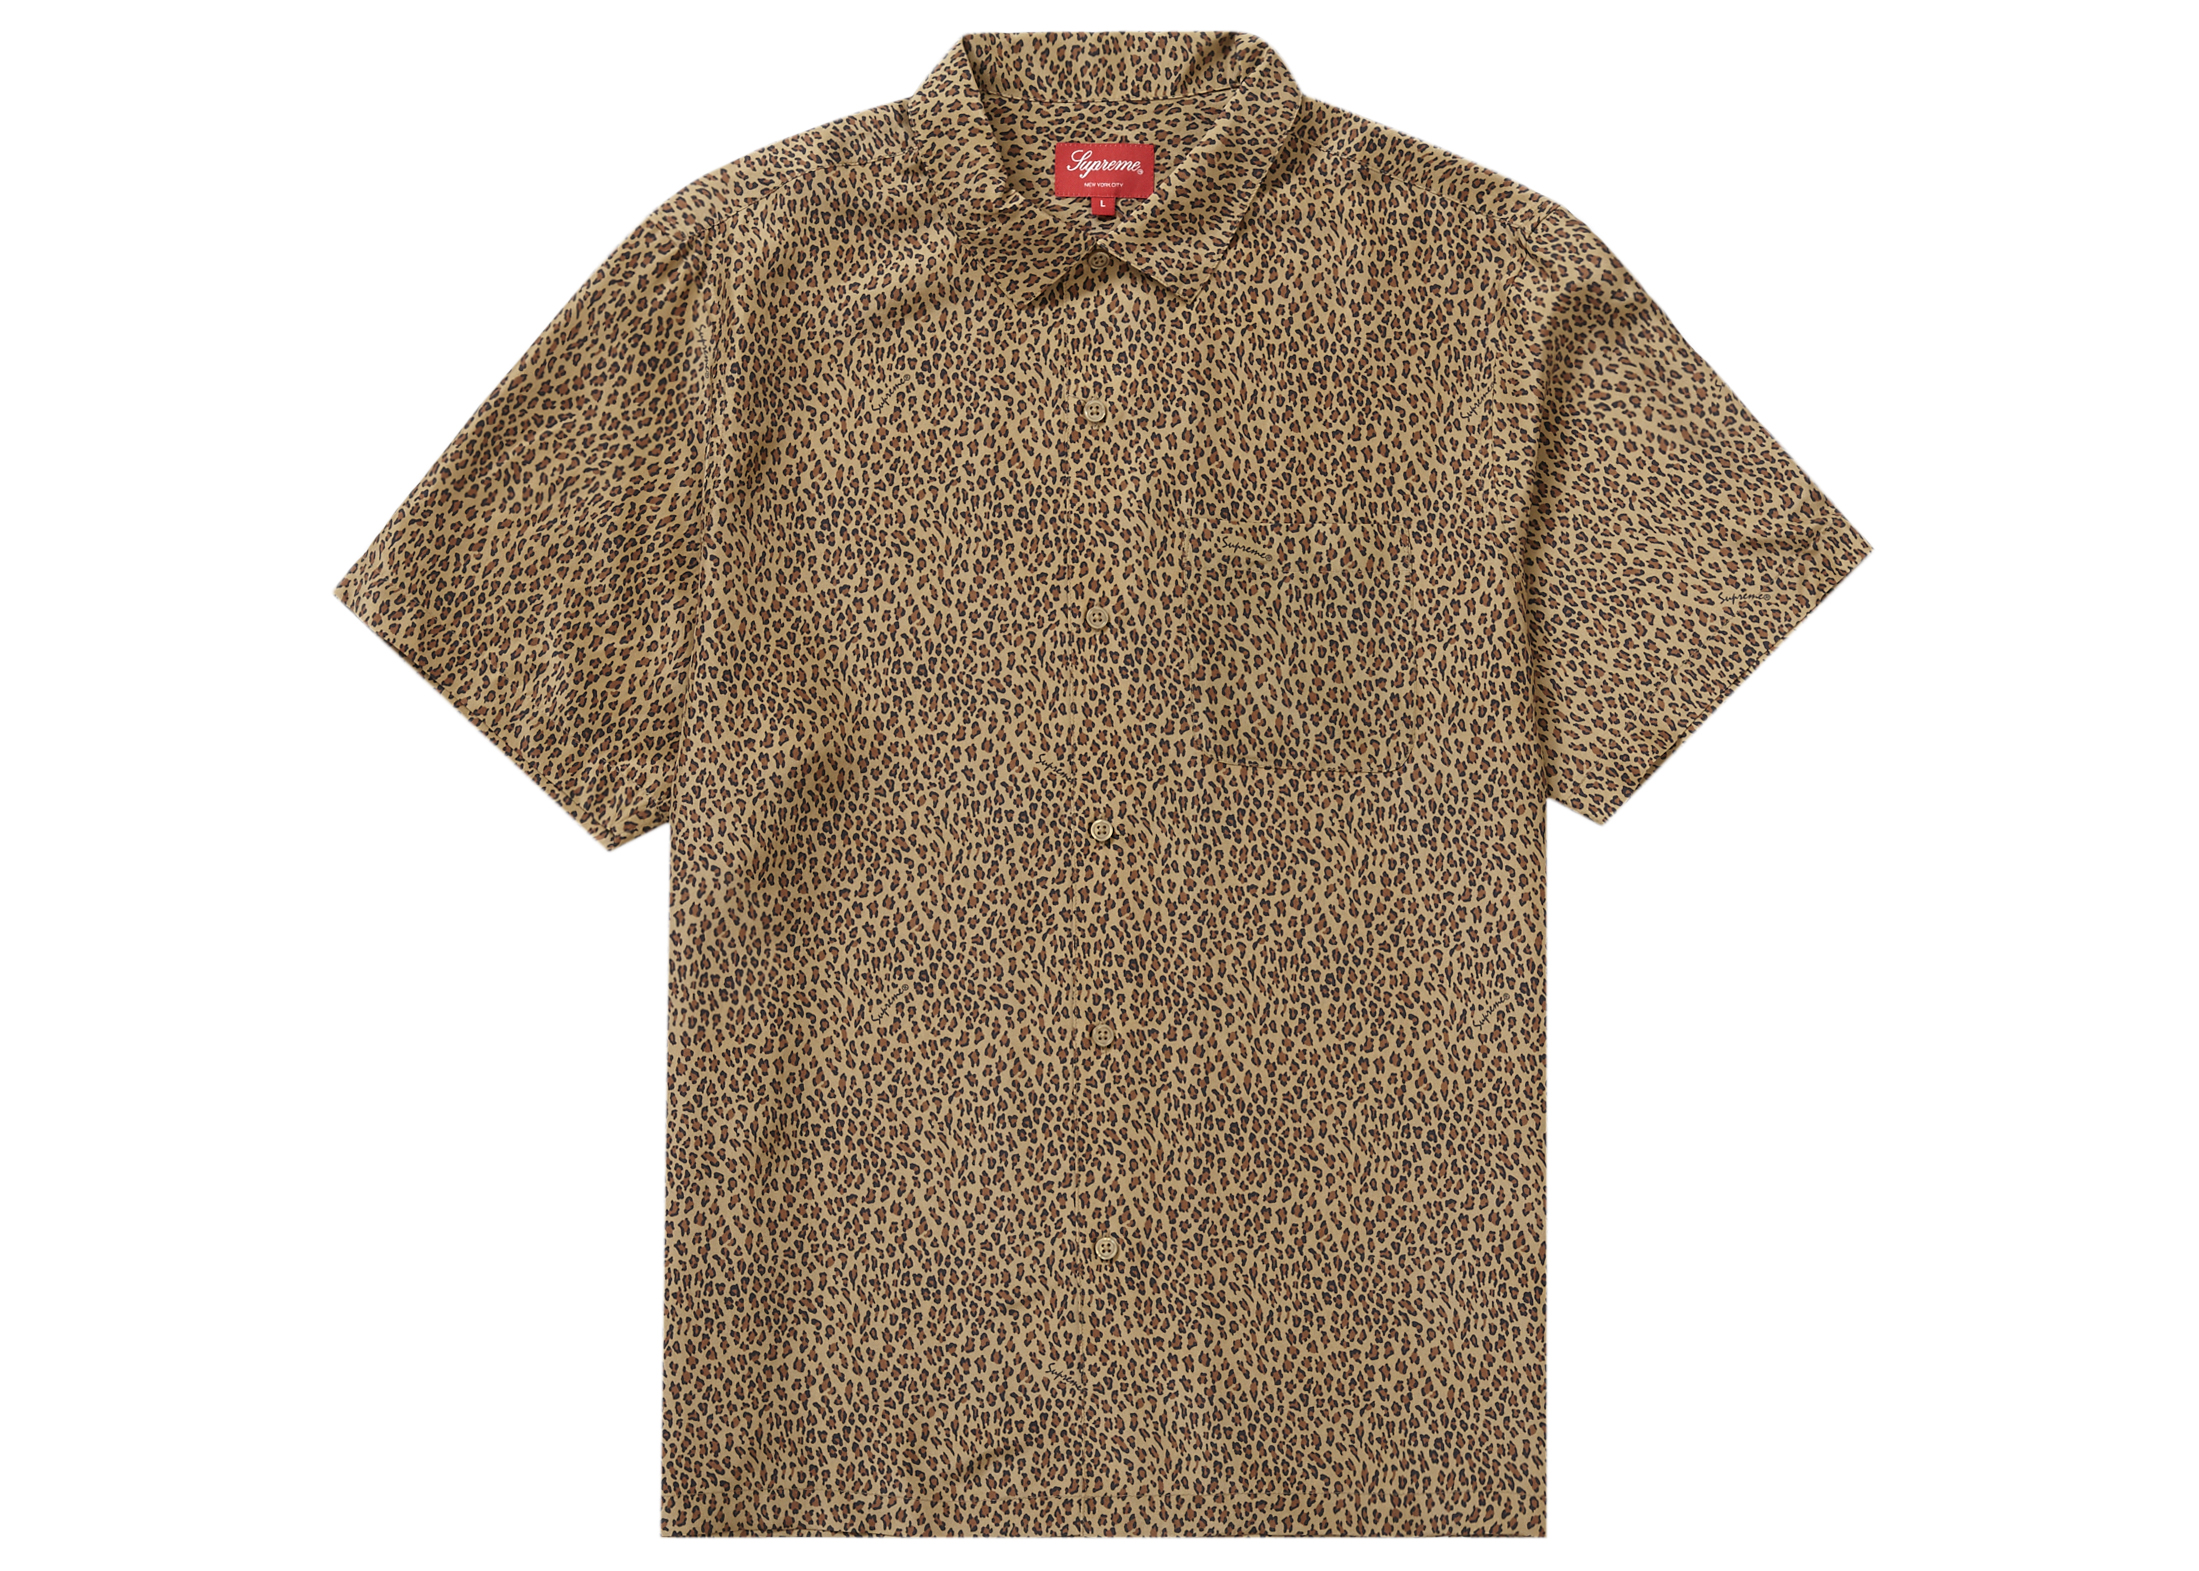 SUPREME Leopard Silk S/S Shirt 22ss